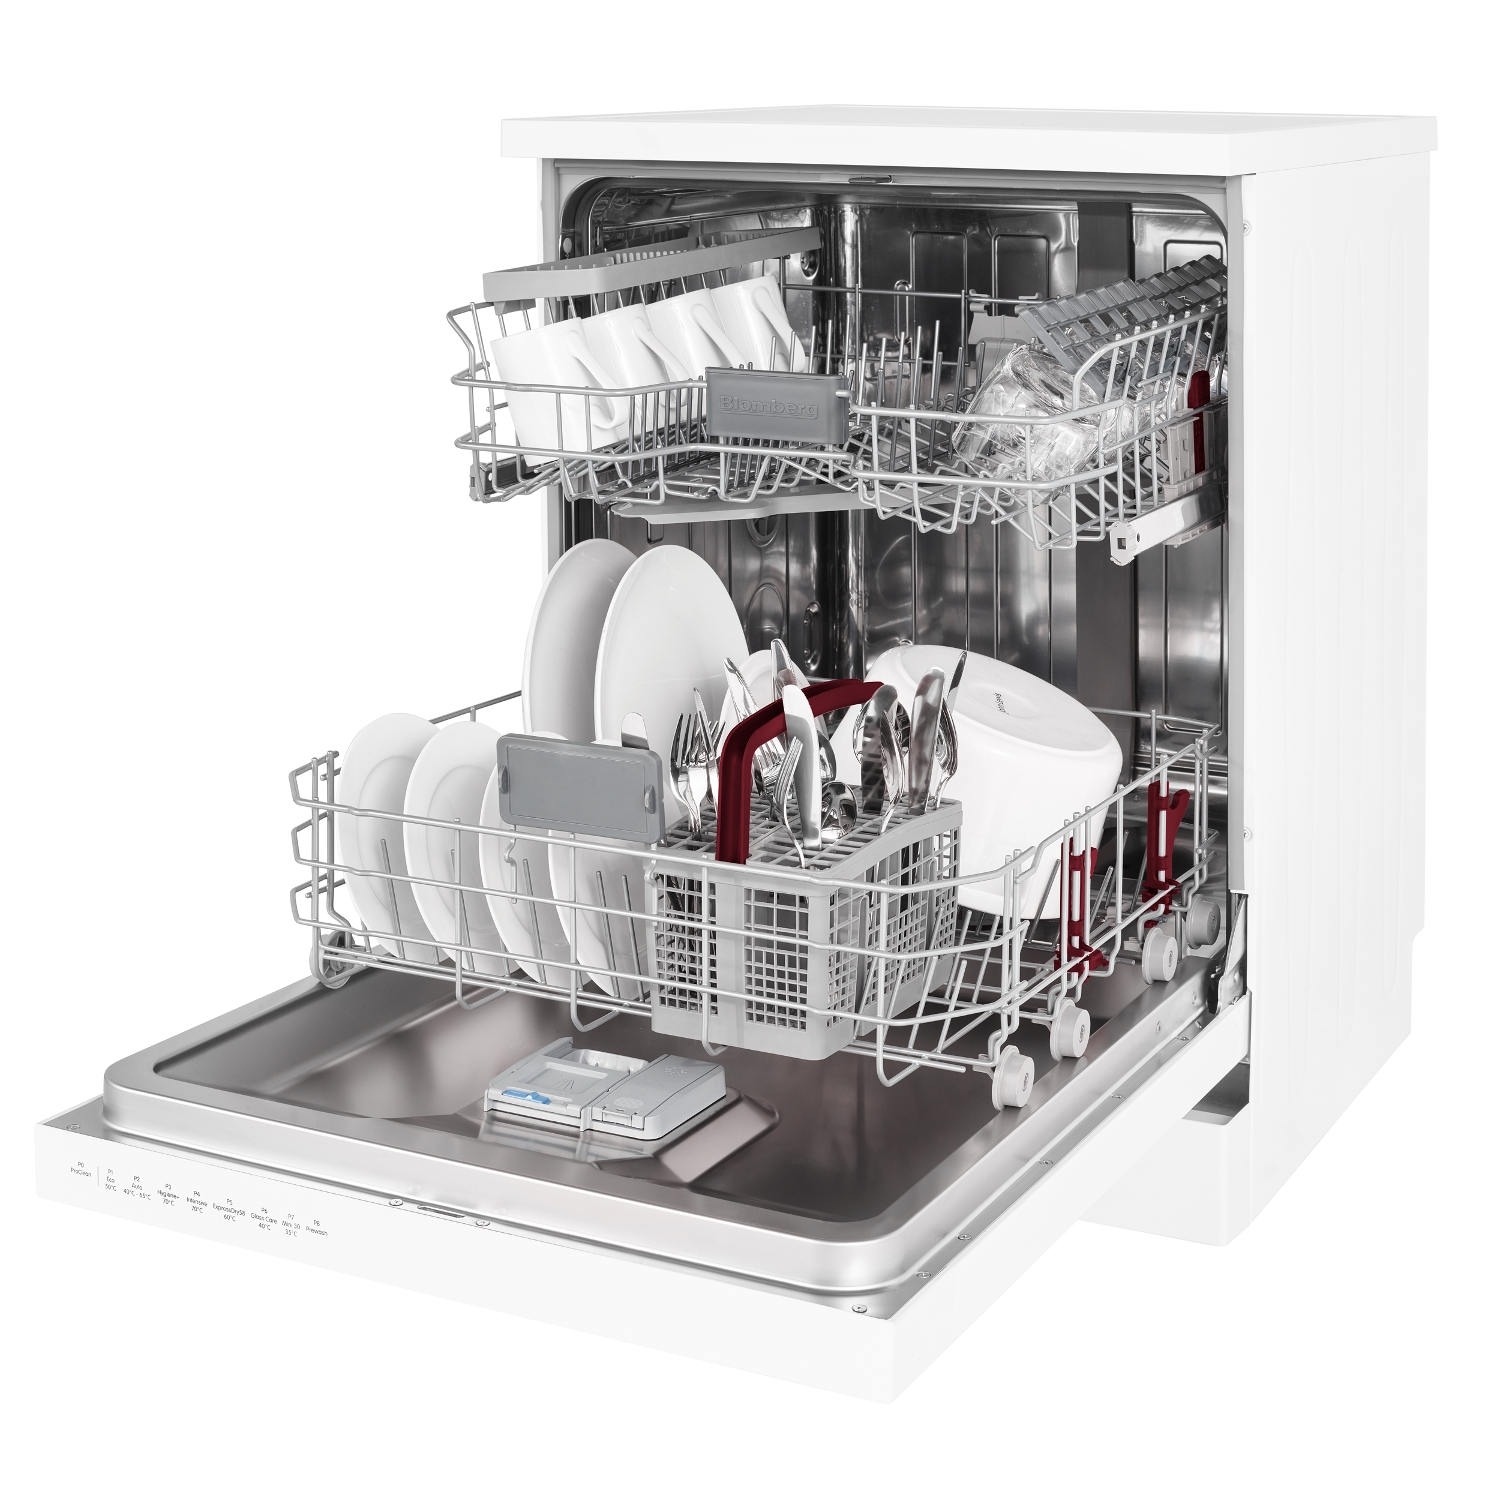 Blomberg LDF42240W Full Size Dishwasher - White - 14 Place Settings - 0